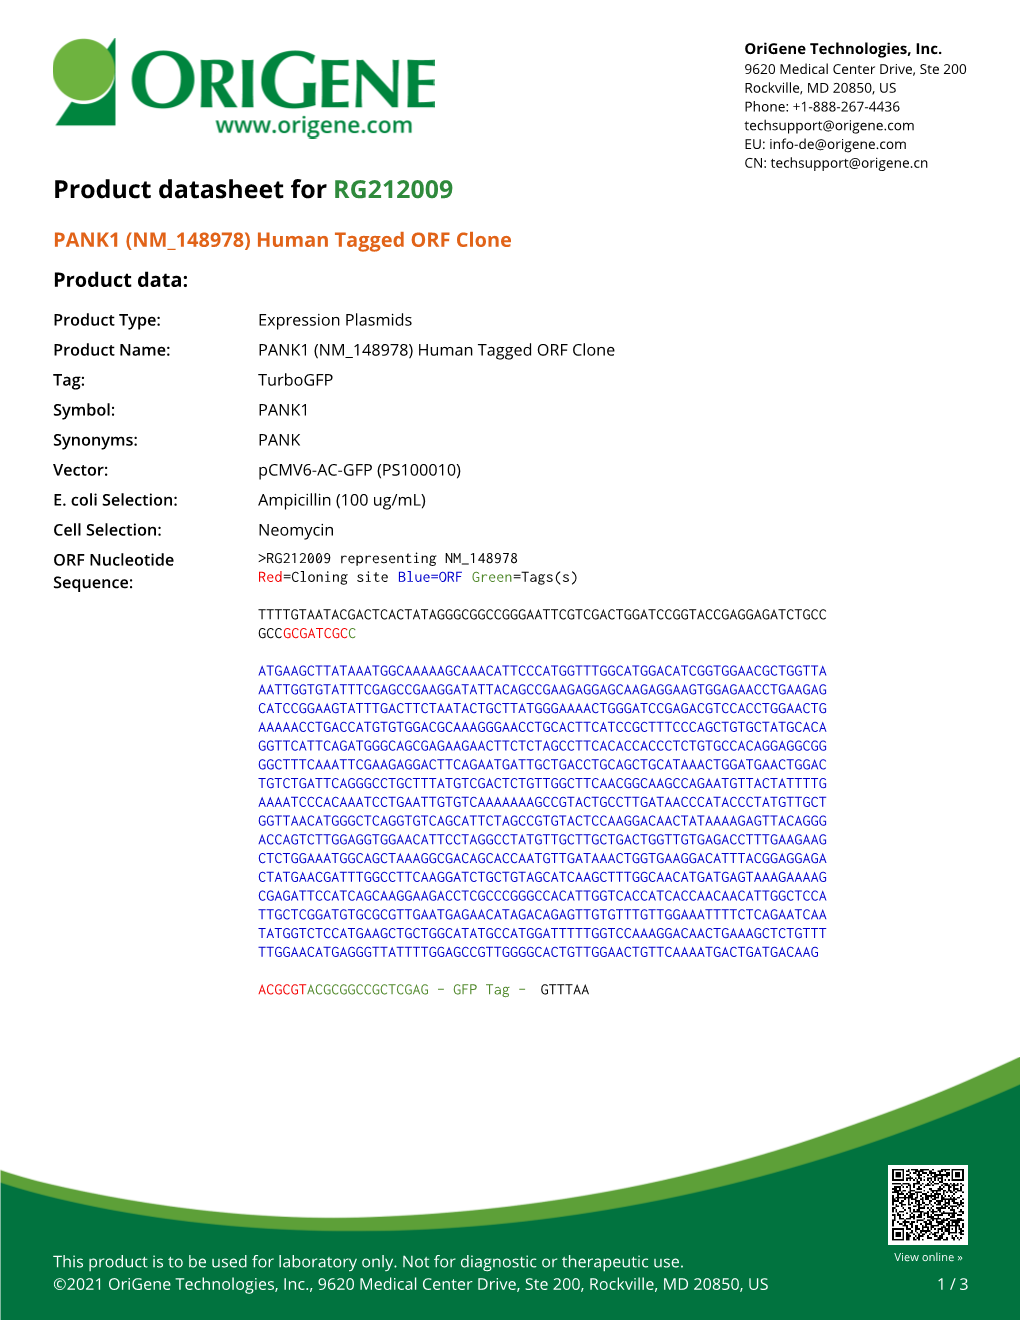 PANK1 (NM 148978) Human Tagged ORF Clone – RG212009 | Origene